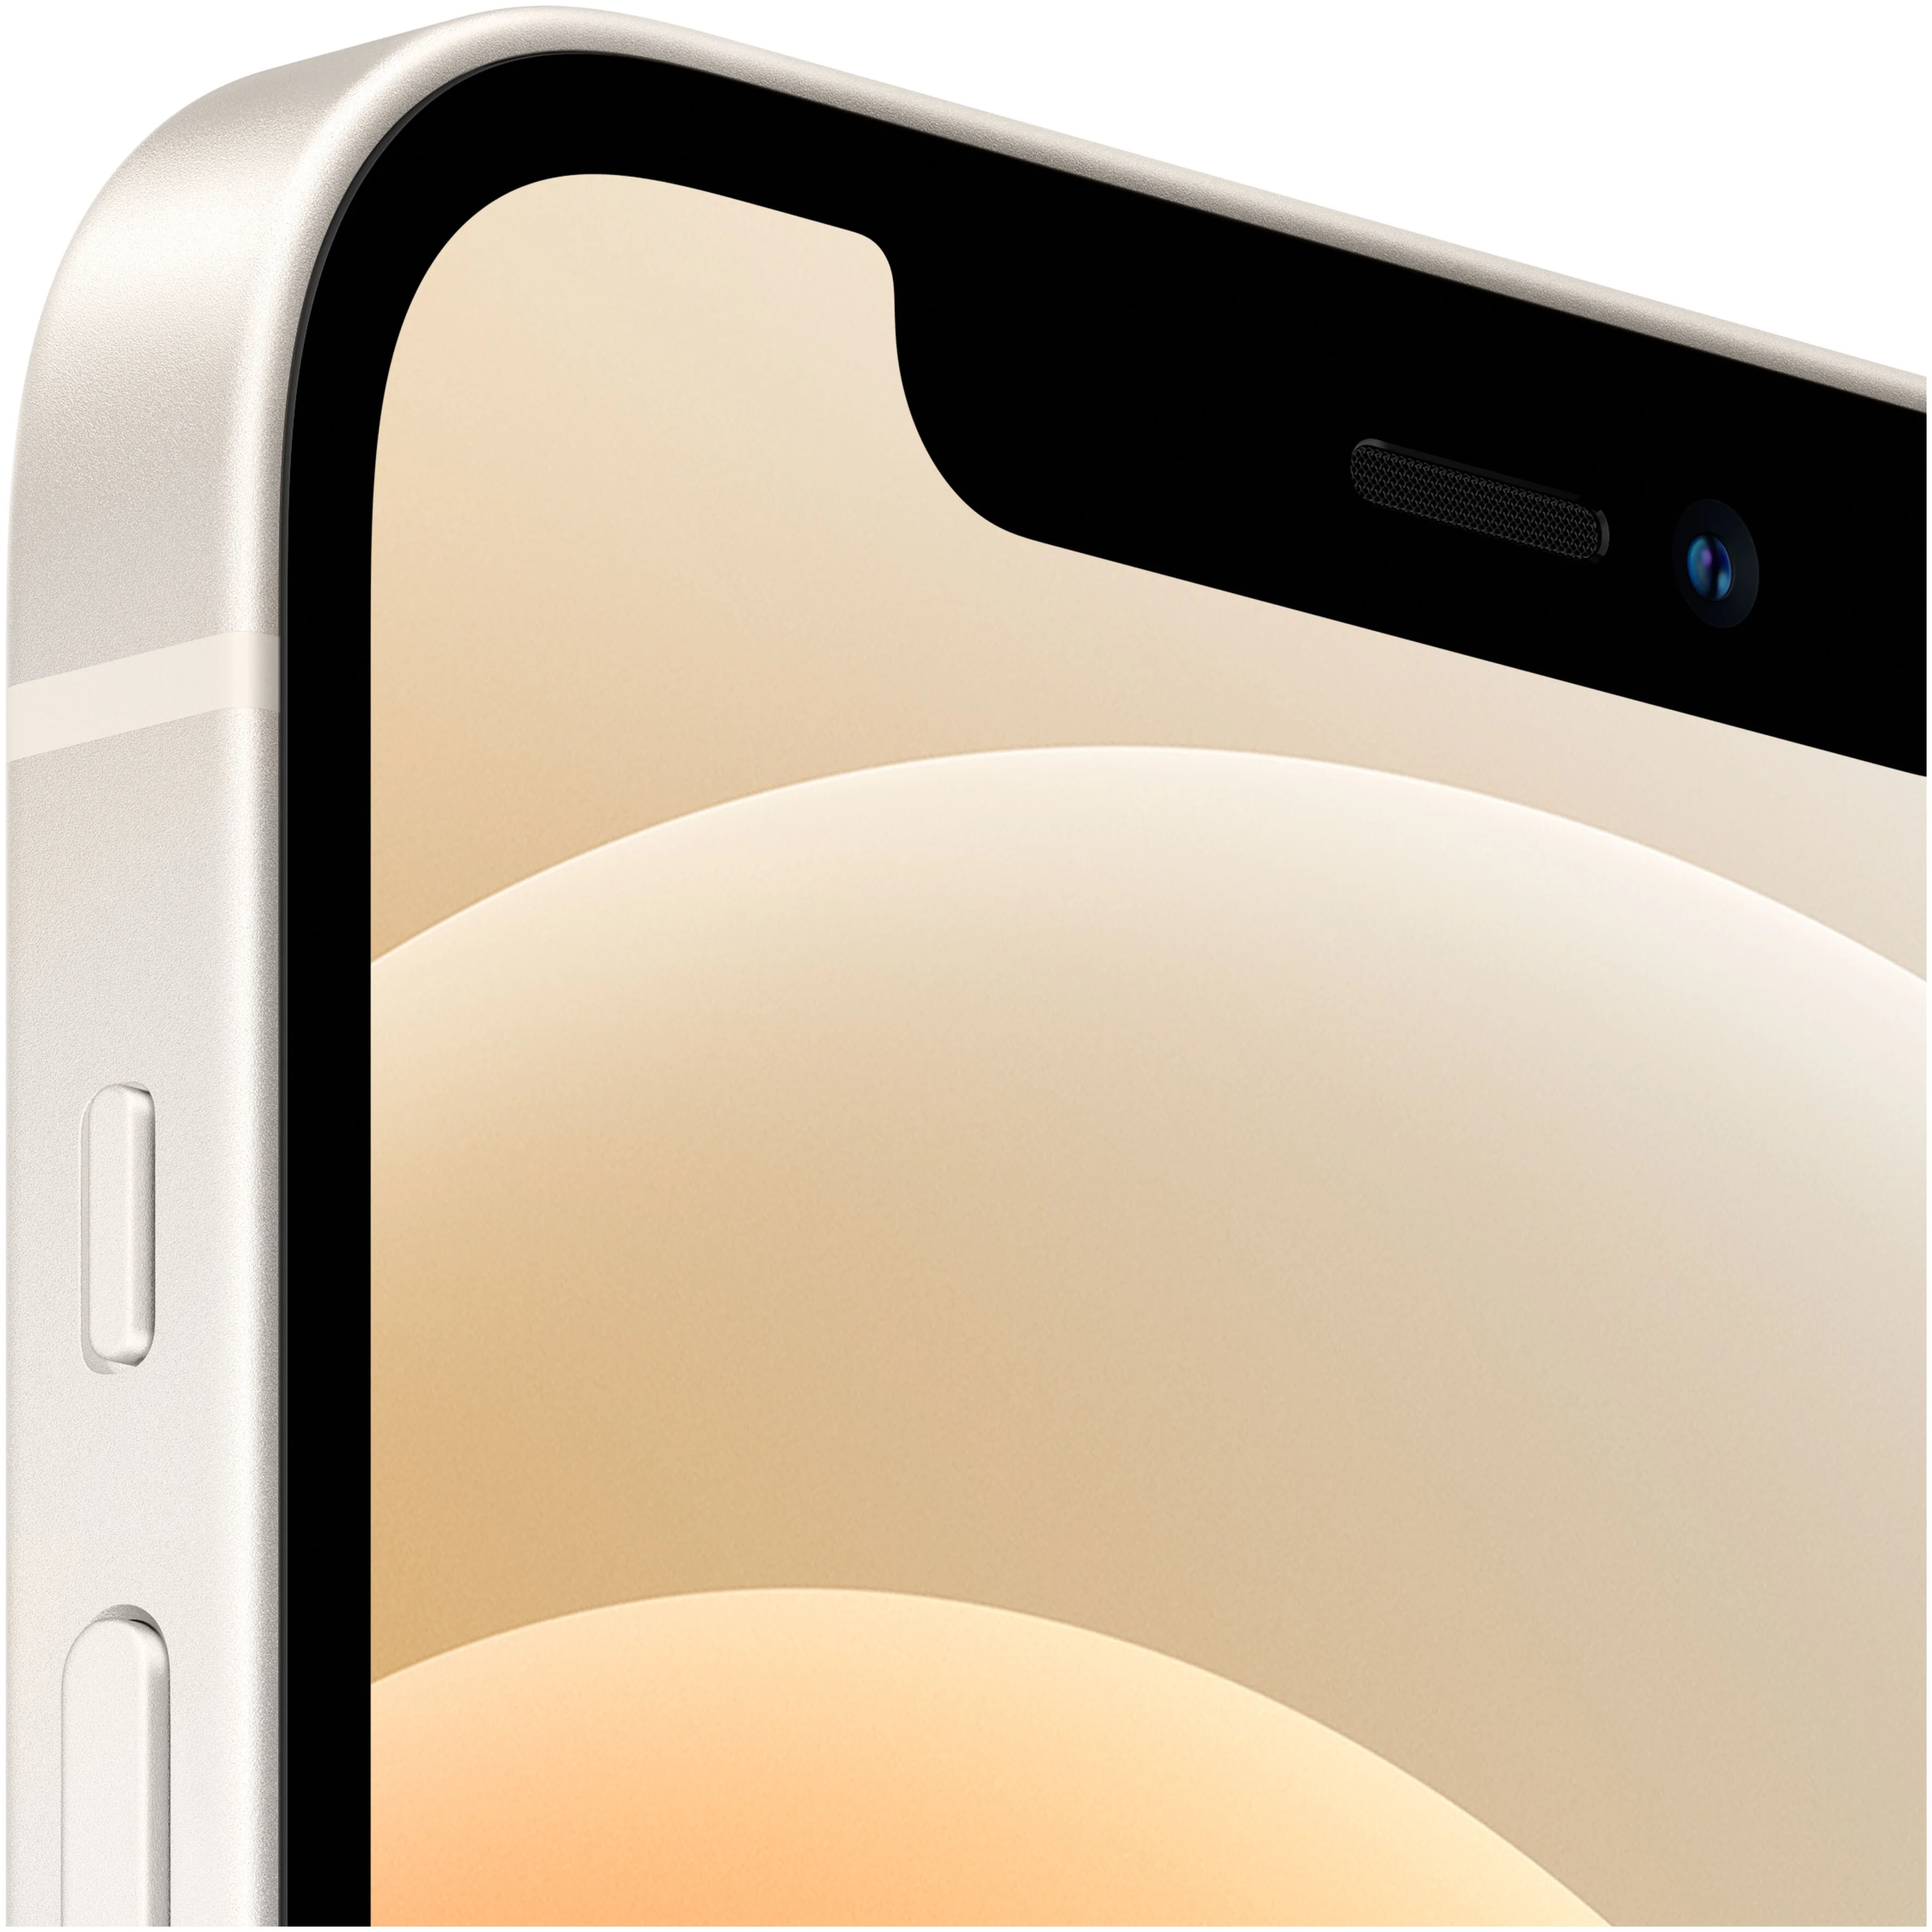 Apple iPhone 12 64GB - операционная система: iOS 14